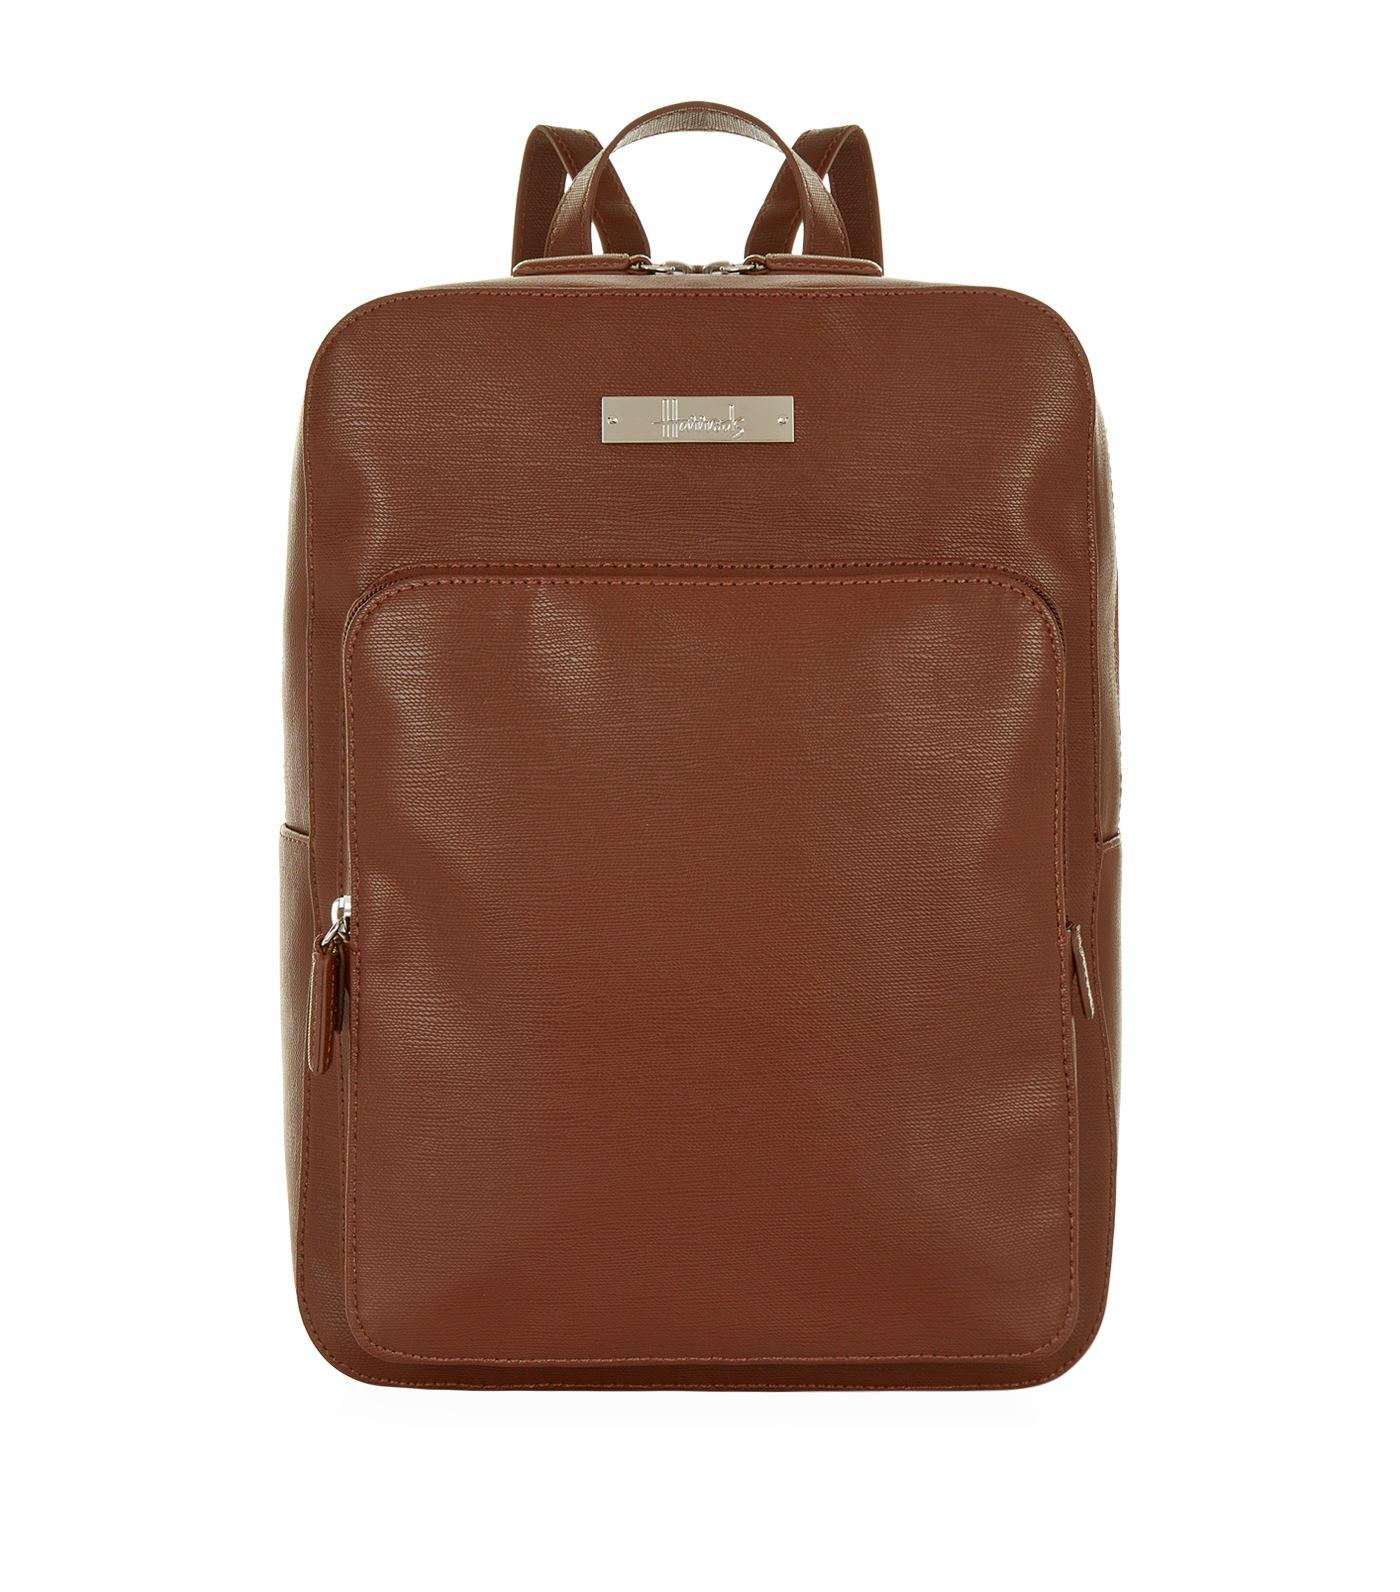 Louis Vuitton Bags Uk Harrods | SEMA Data Co-op